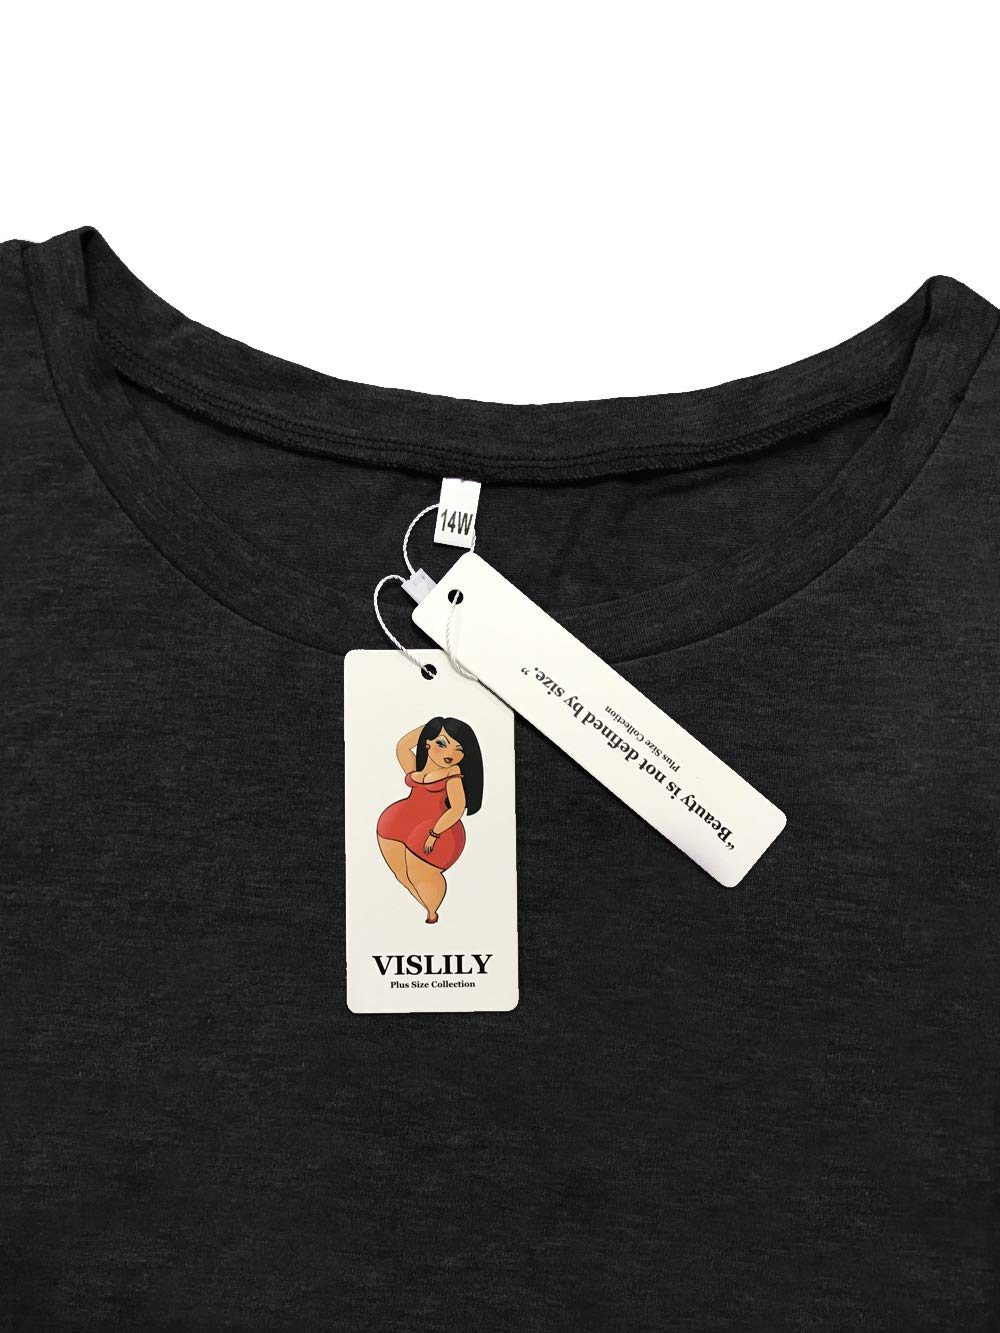 VISLILY Womens Plus Size Tops 4Xl Short Sleeve Shirts Flattering